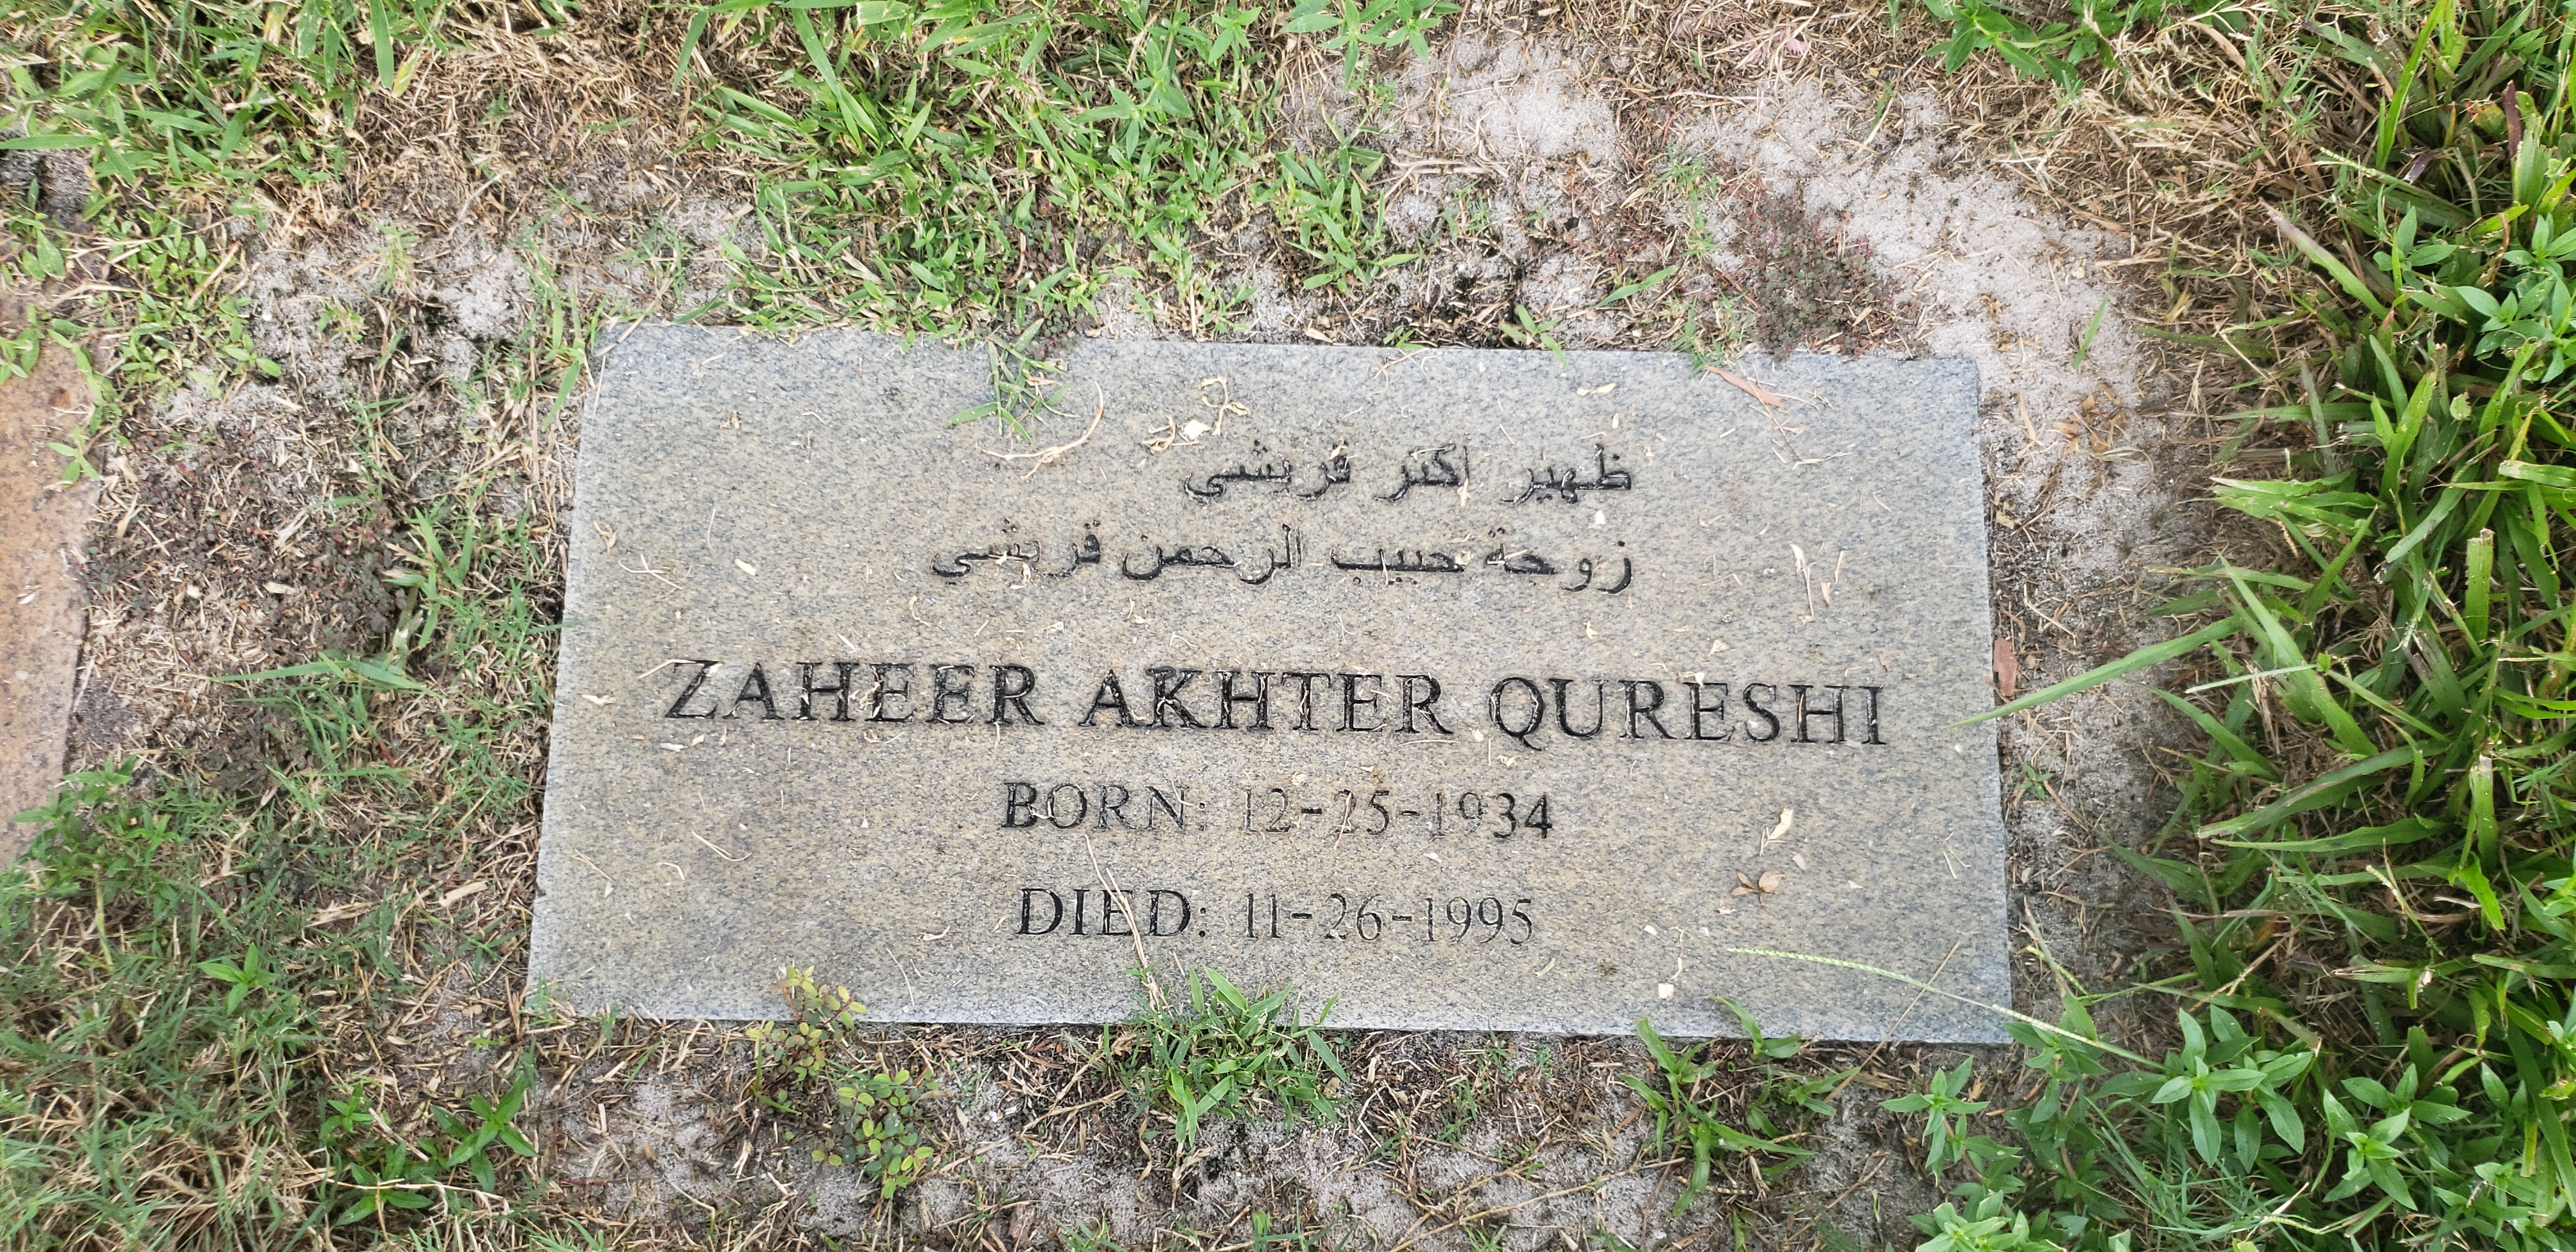 Zaheer Akhter Qureshi